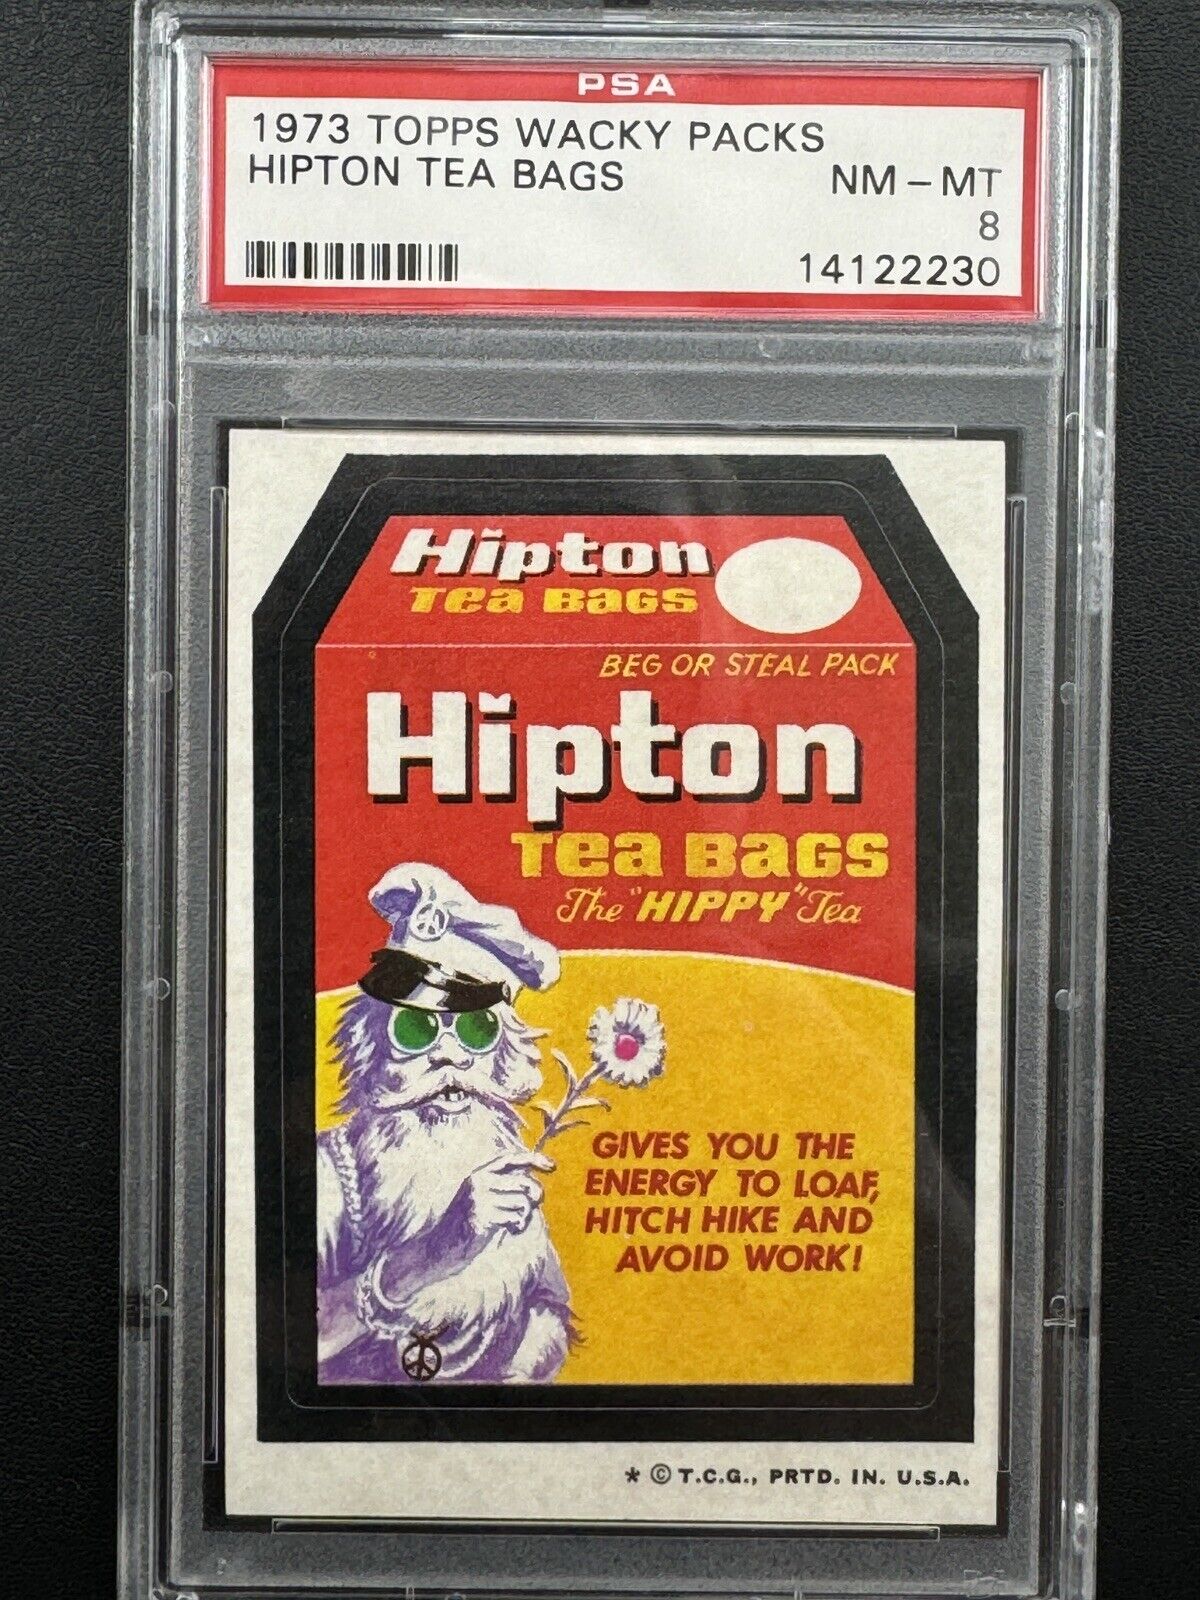 1973 Topps Wacky Packages, Series 4 HIPTON TEA, PSA 8 NM-MT